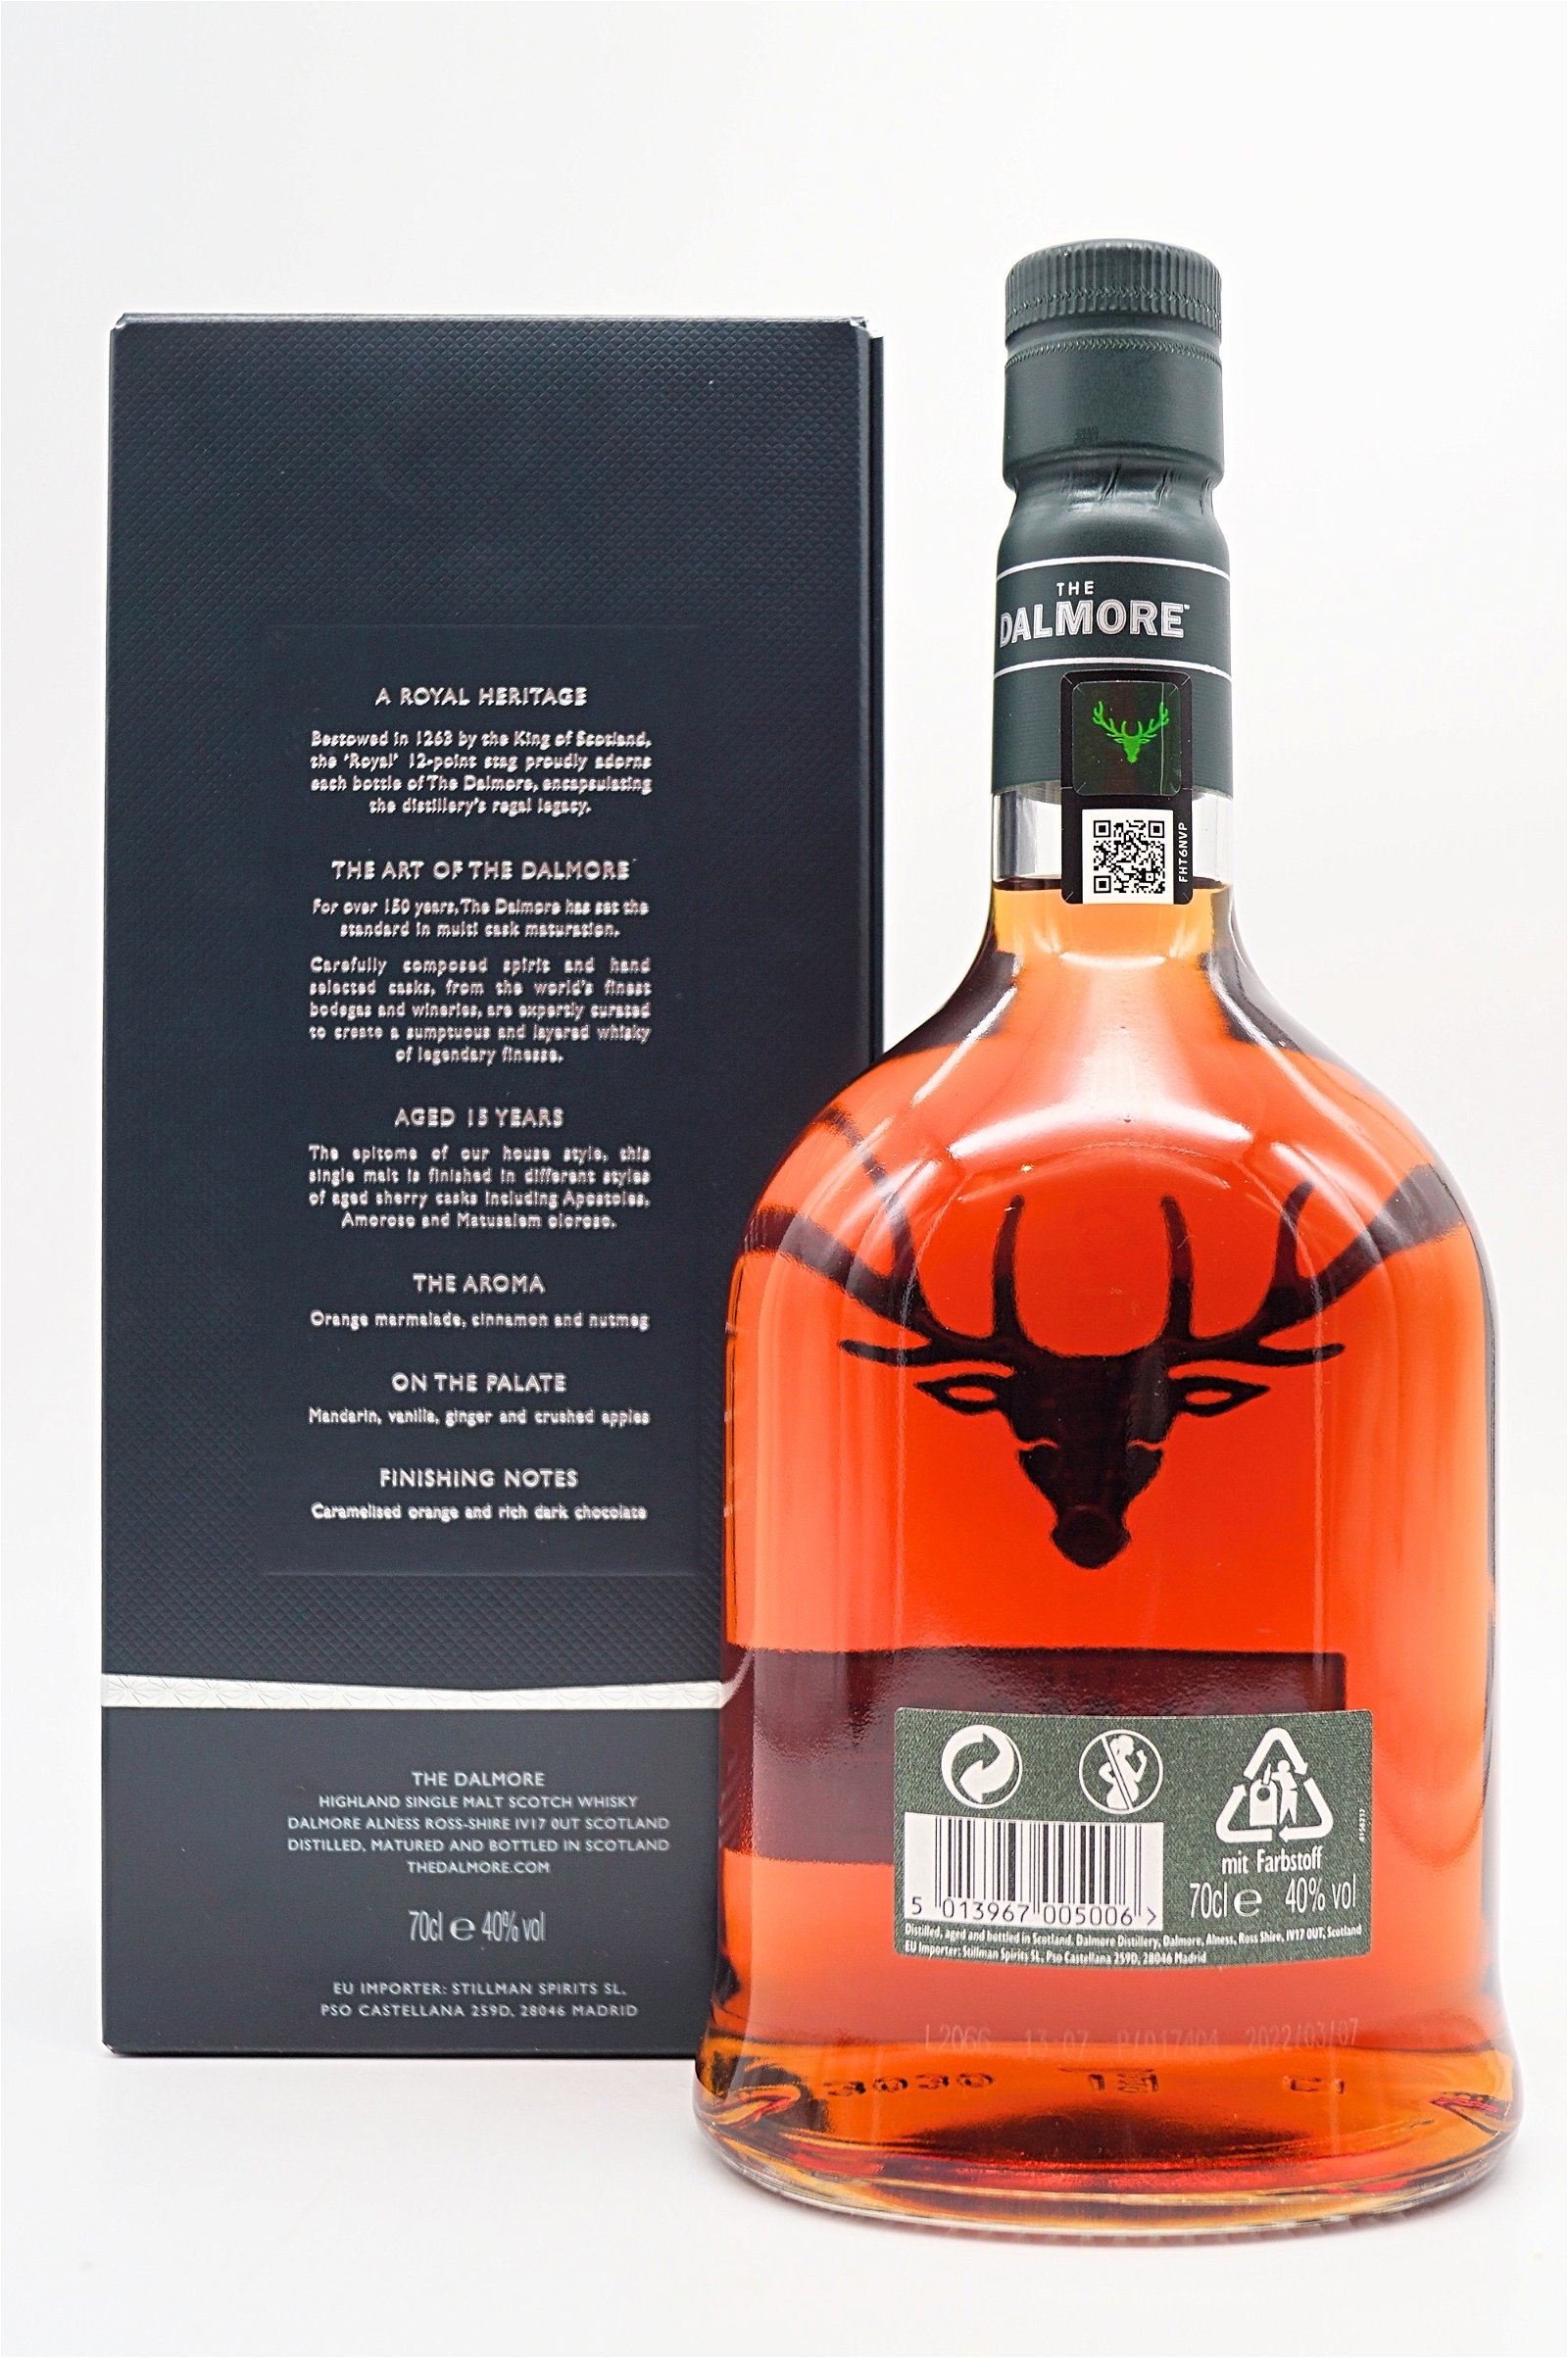 The Dalmore 15 Jahre Highland Single Malt Scotch Whisky